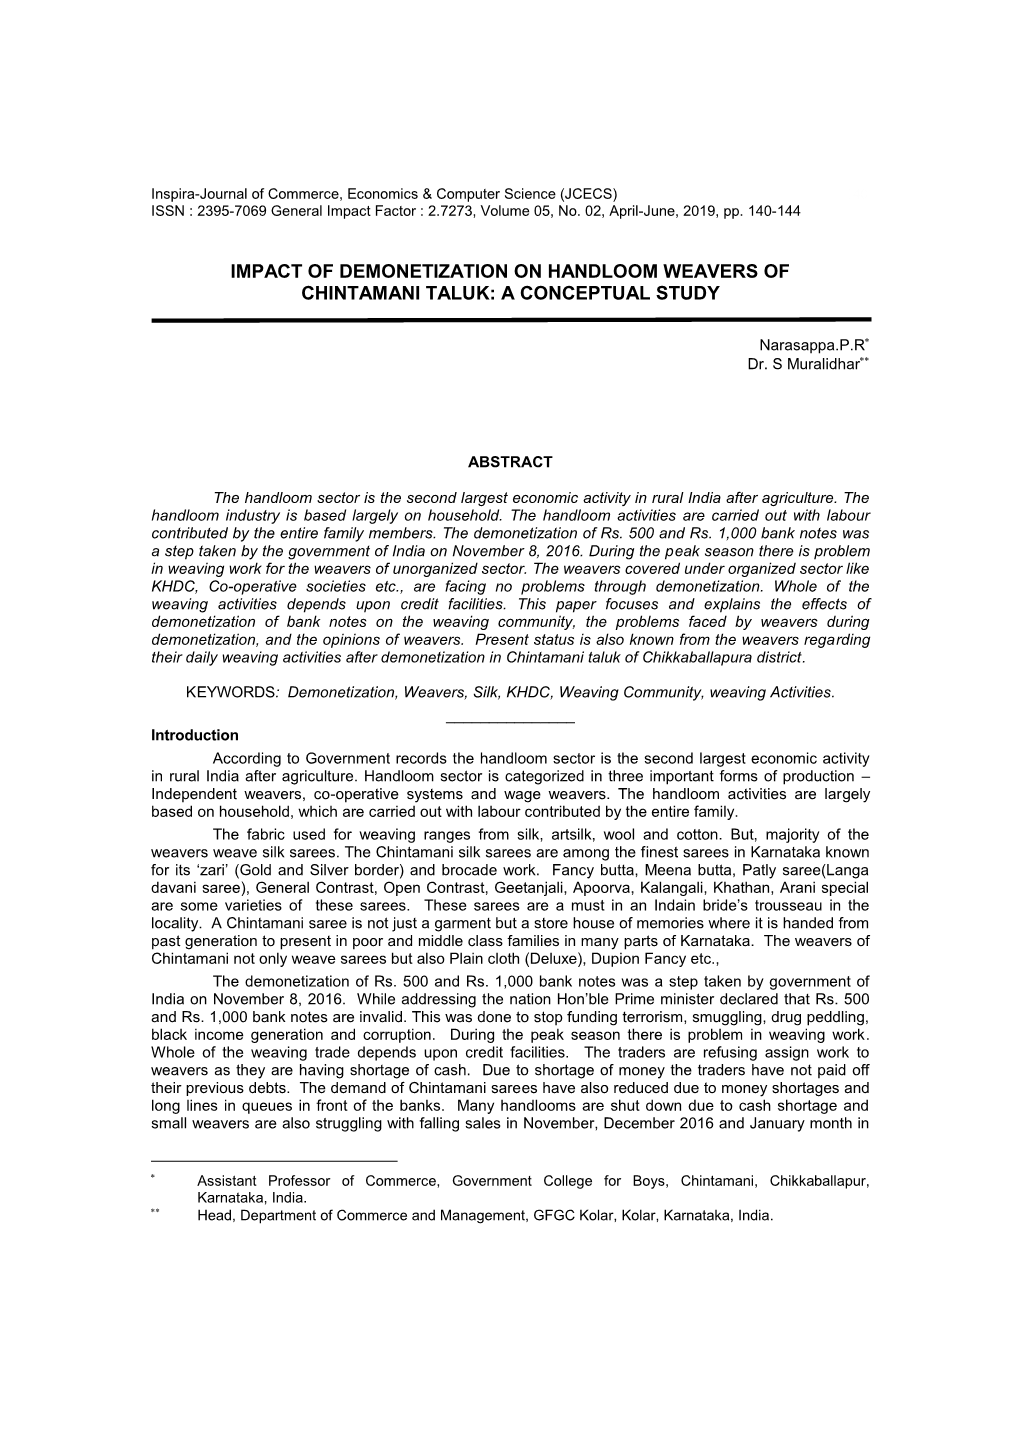 Impact of Demonetization on Handloom Weavers of Chintamani Taluk: a Conceptual Study